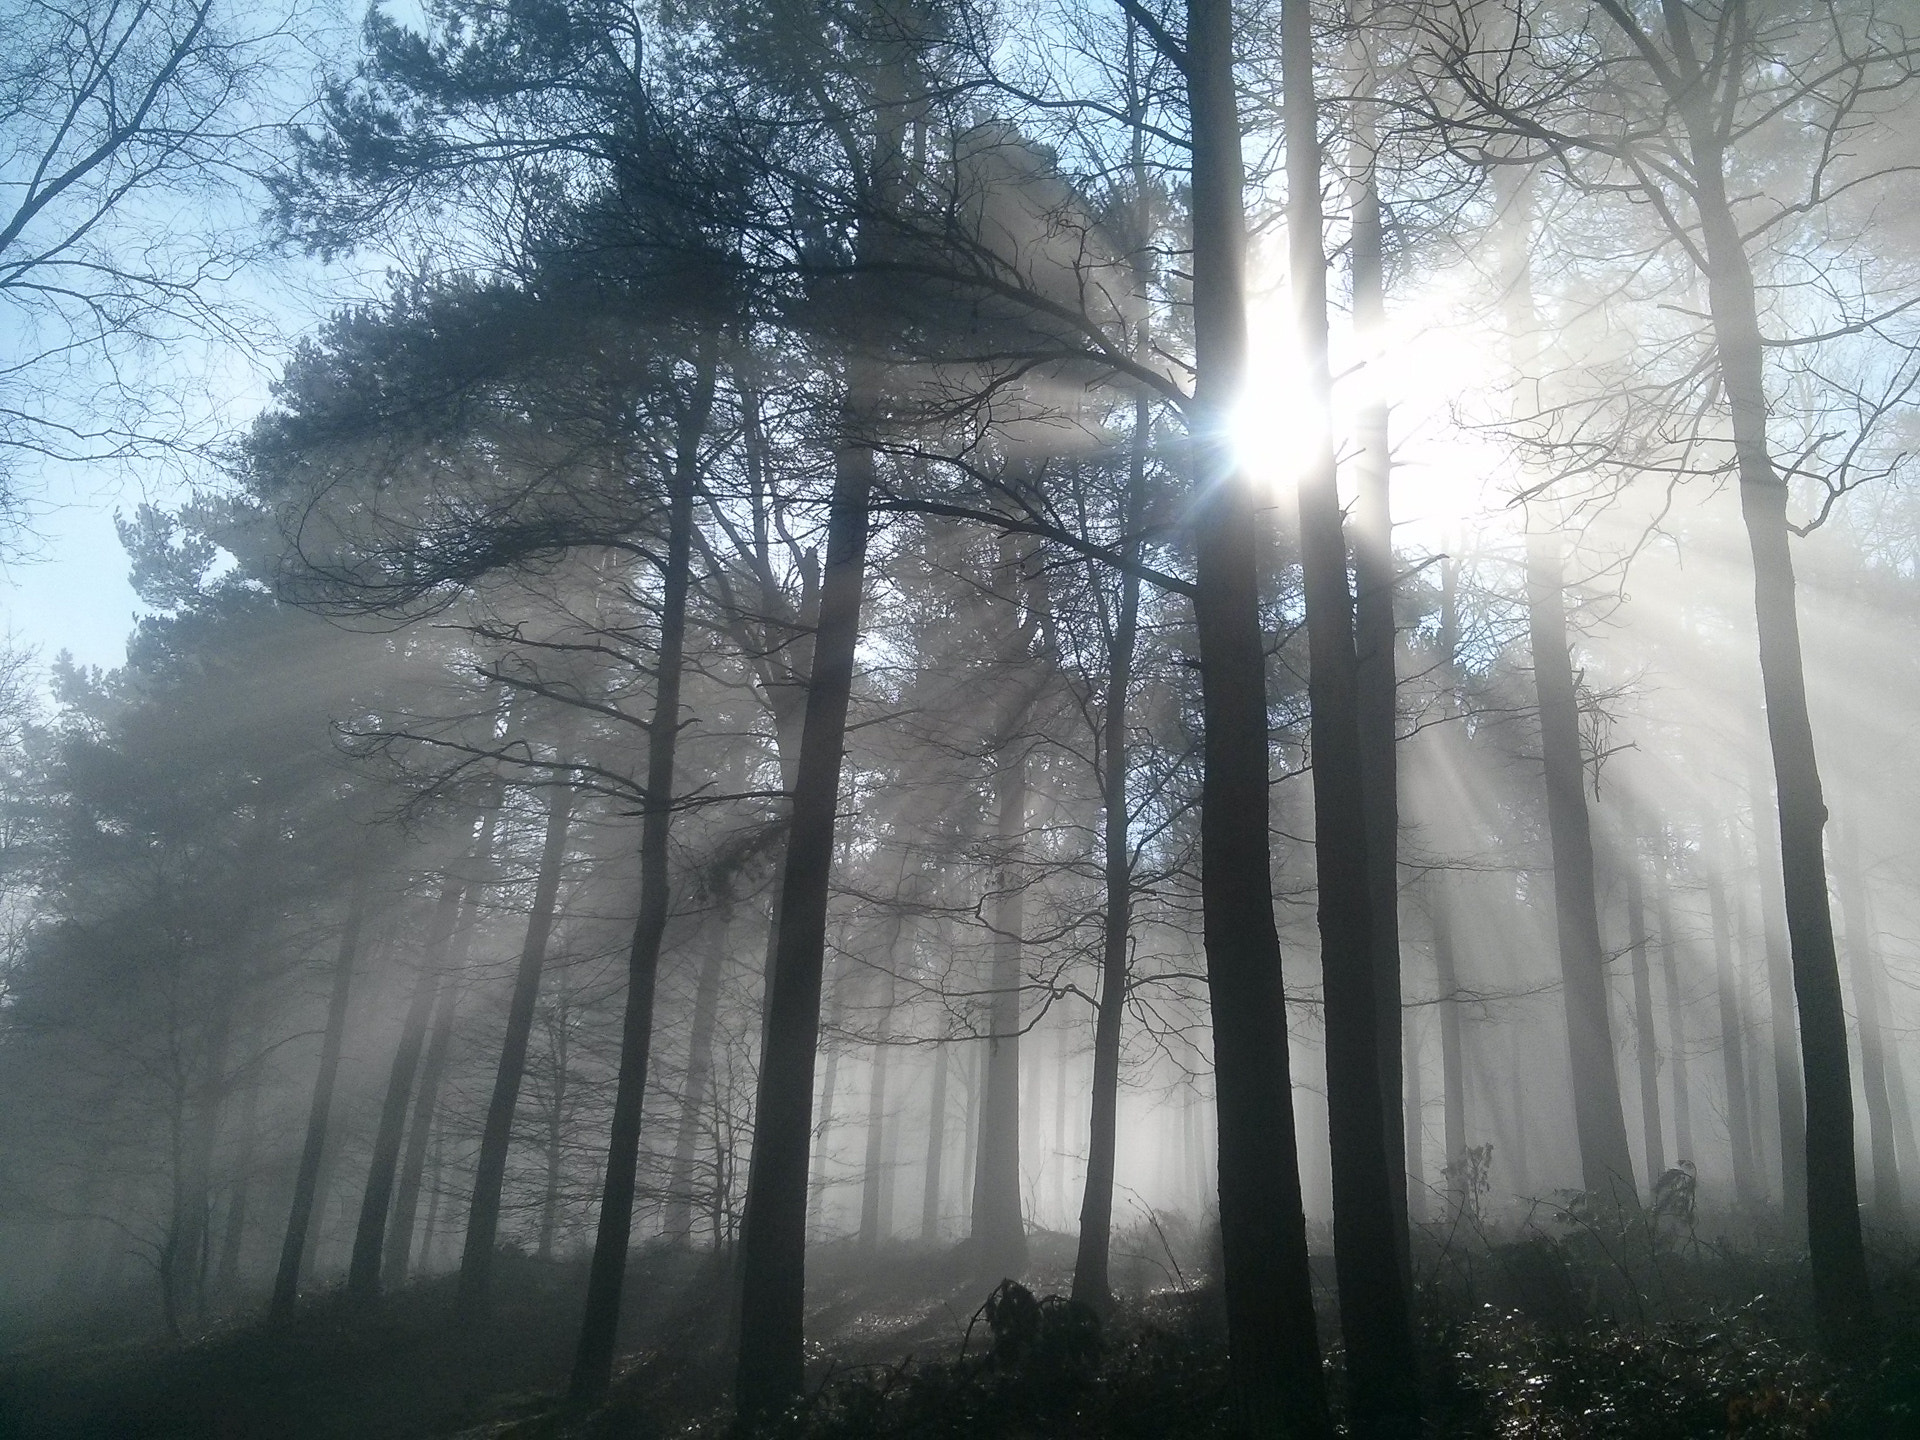 LG Nexus 4 sample photo. Into the woods photography